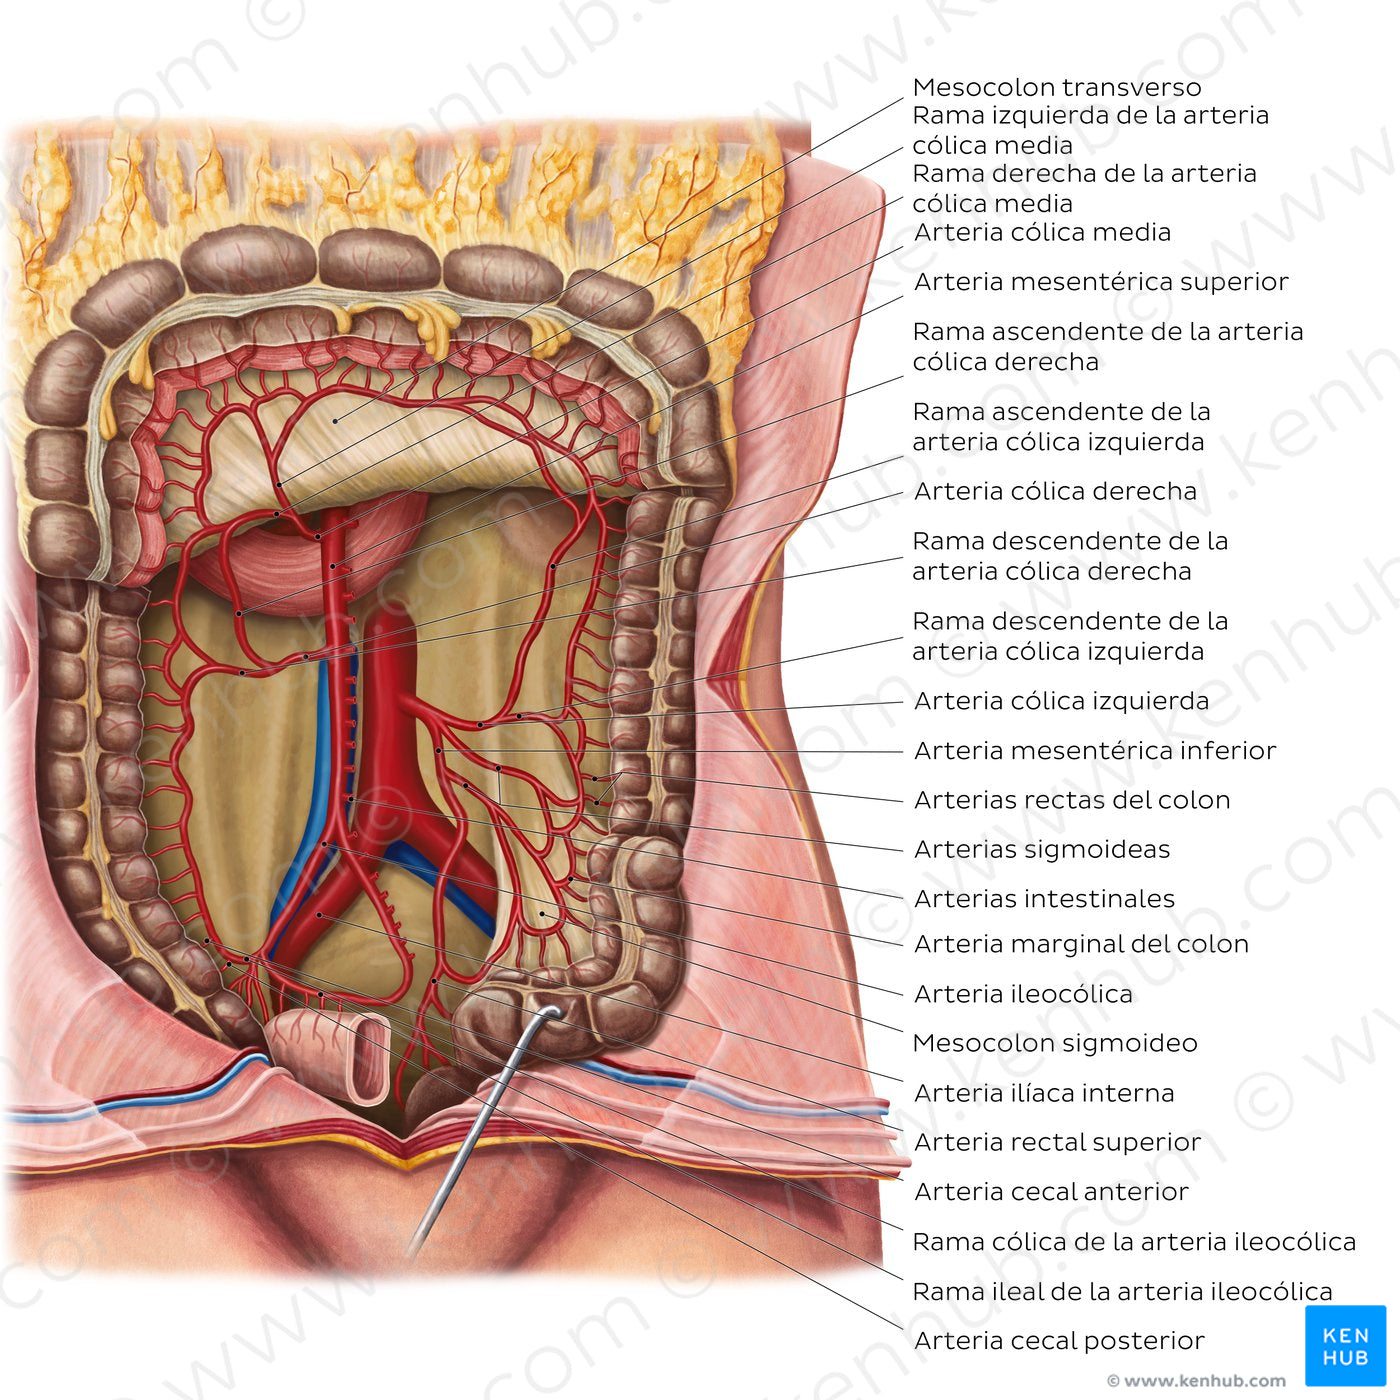 Arteries of the large intestine (Spanish)